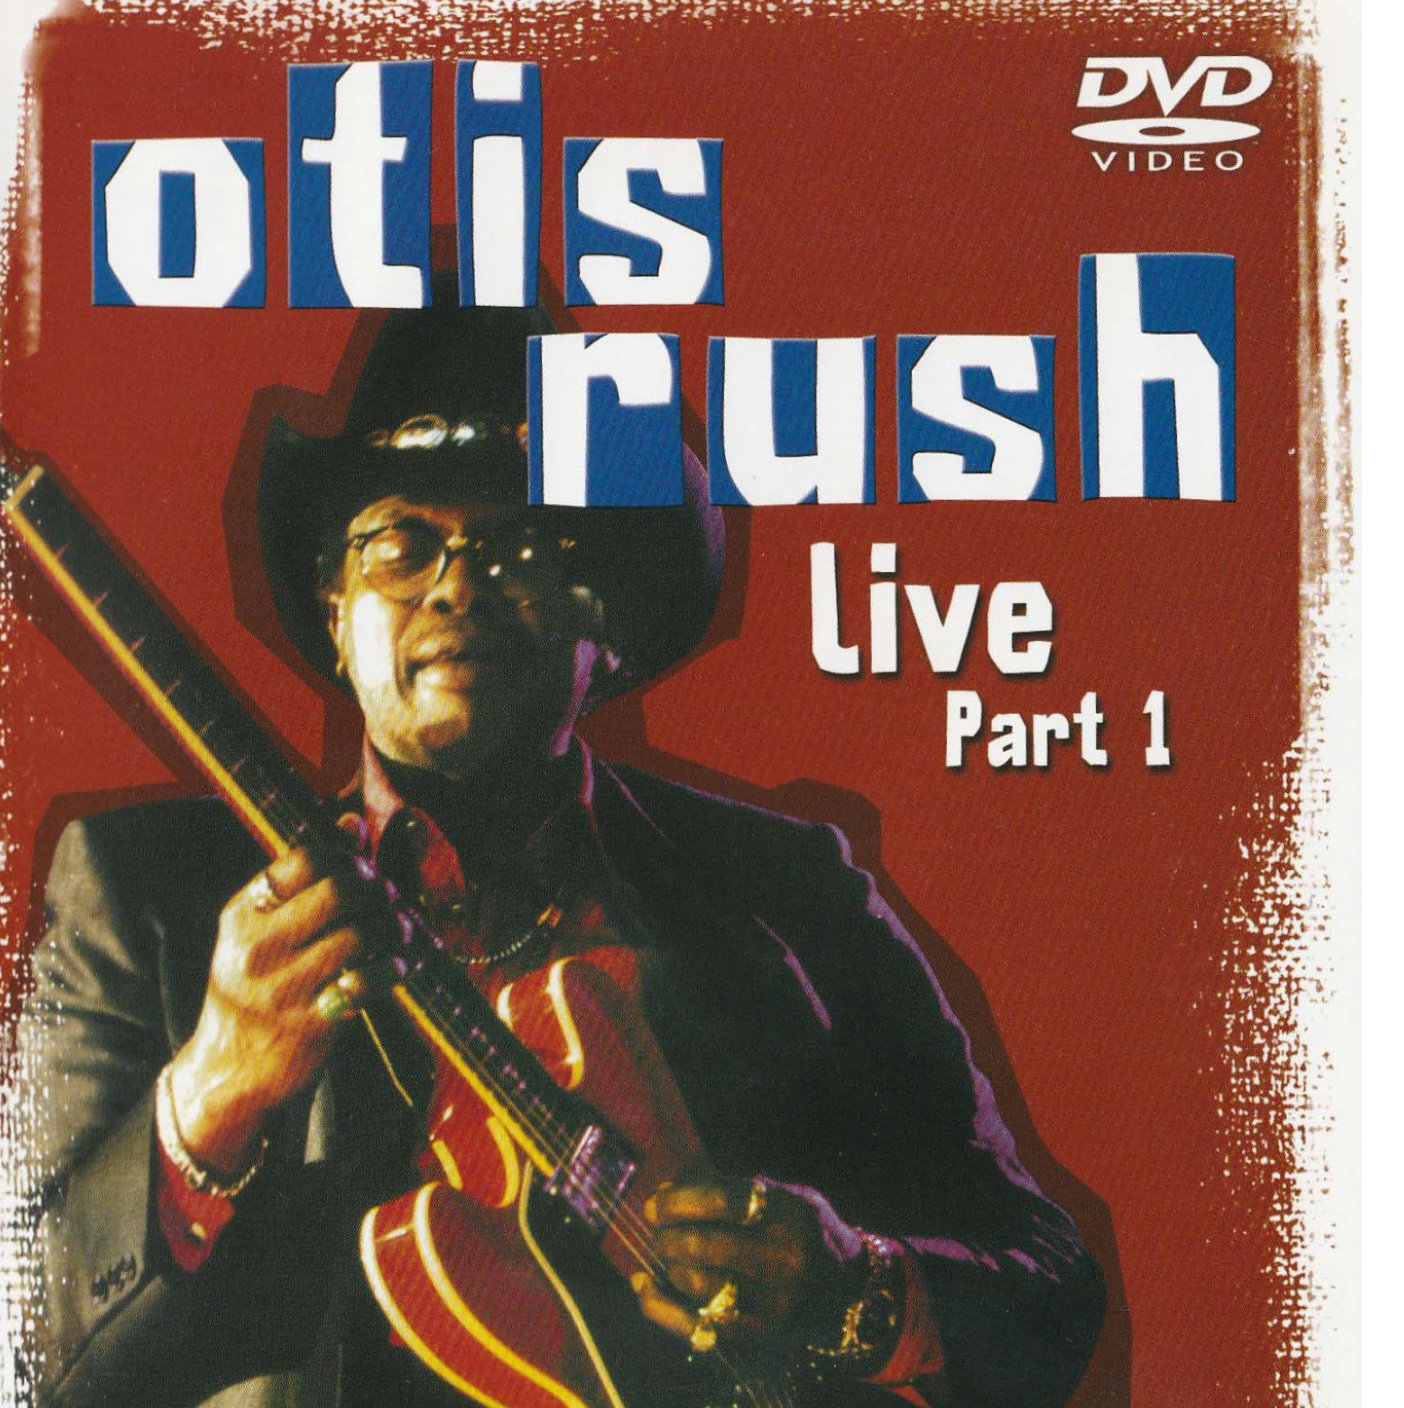 Otis Rush